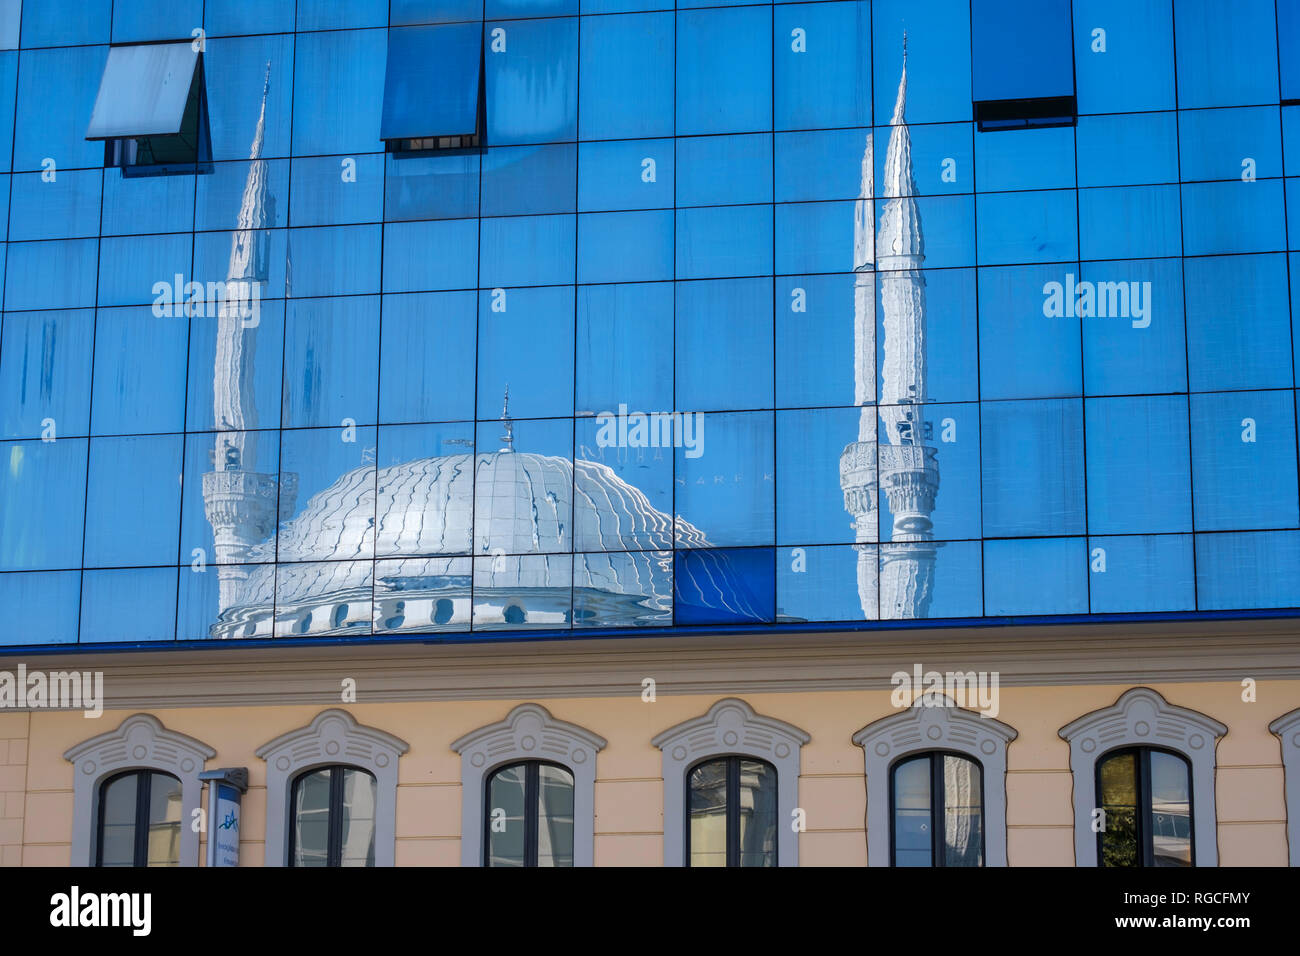 Albania, Shkoder, Ebu Beker Mosque, mirrored in glass facade Stock Photo